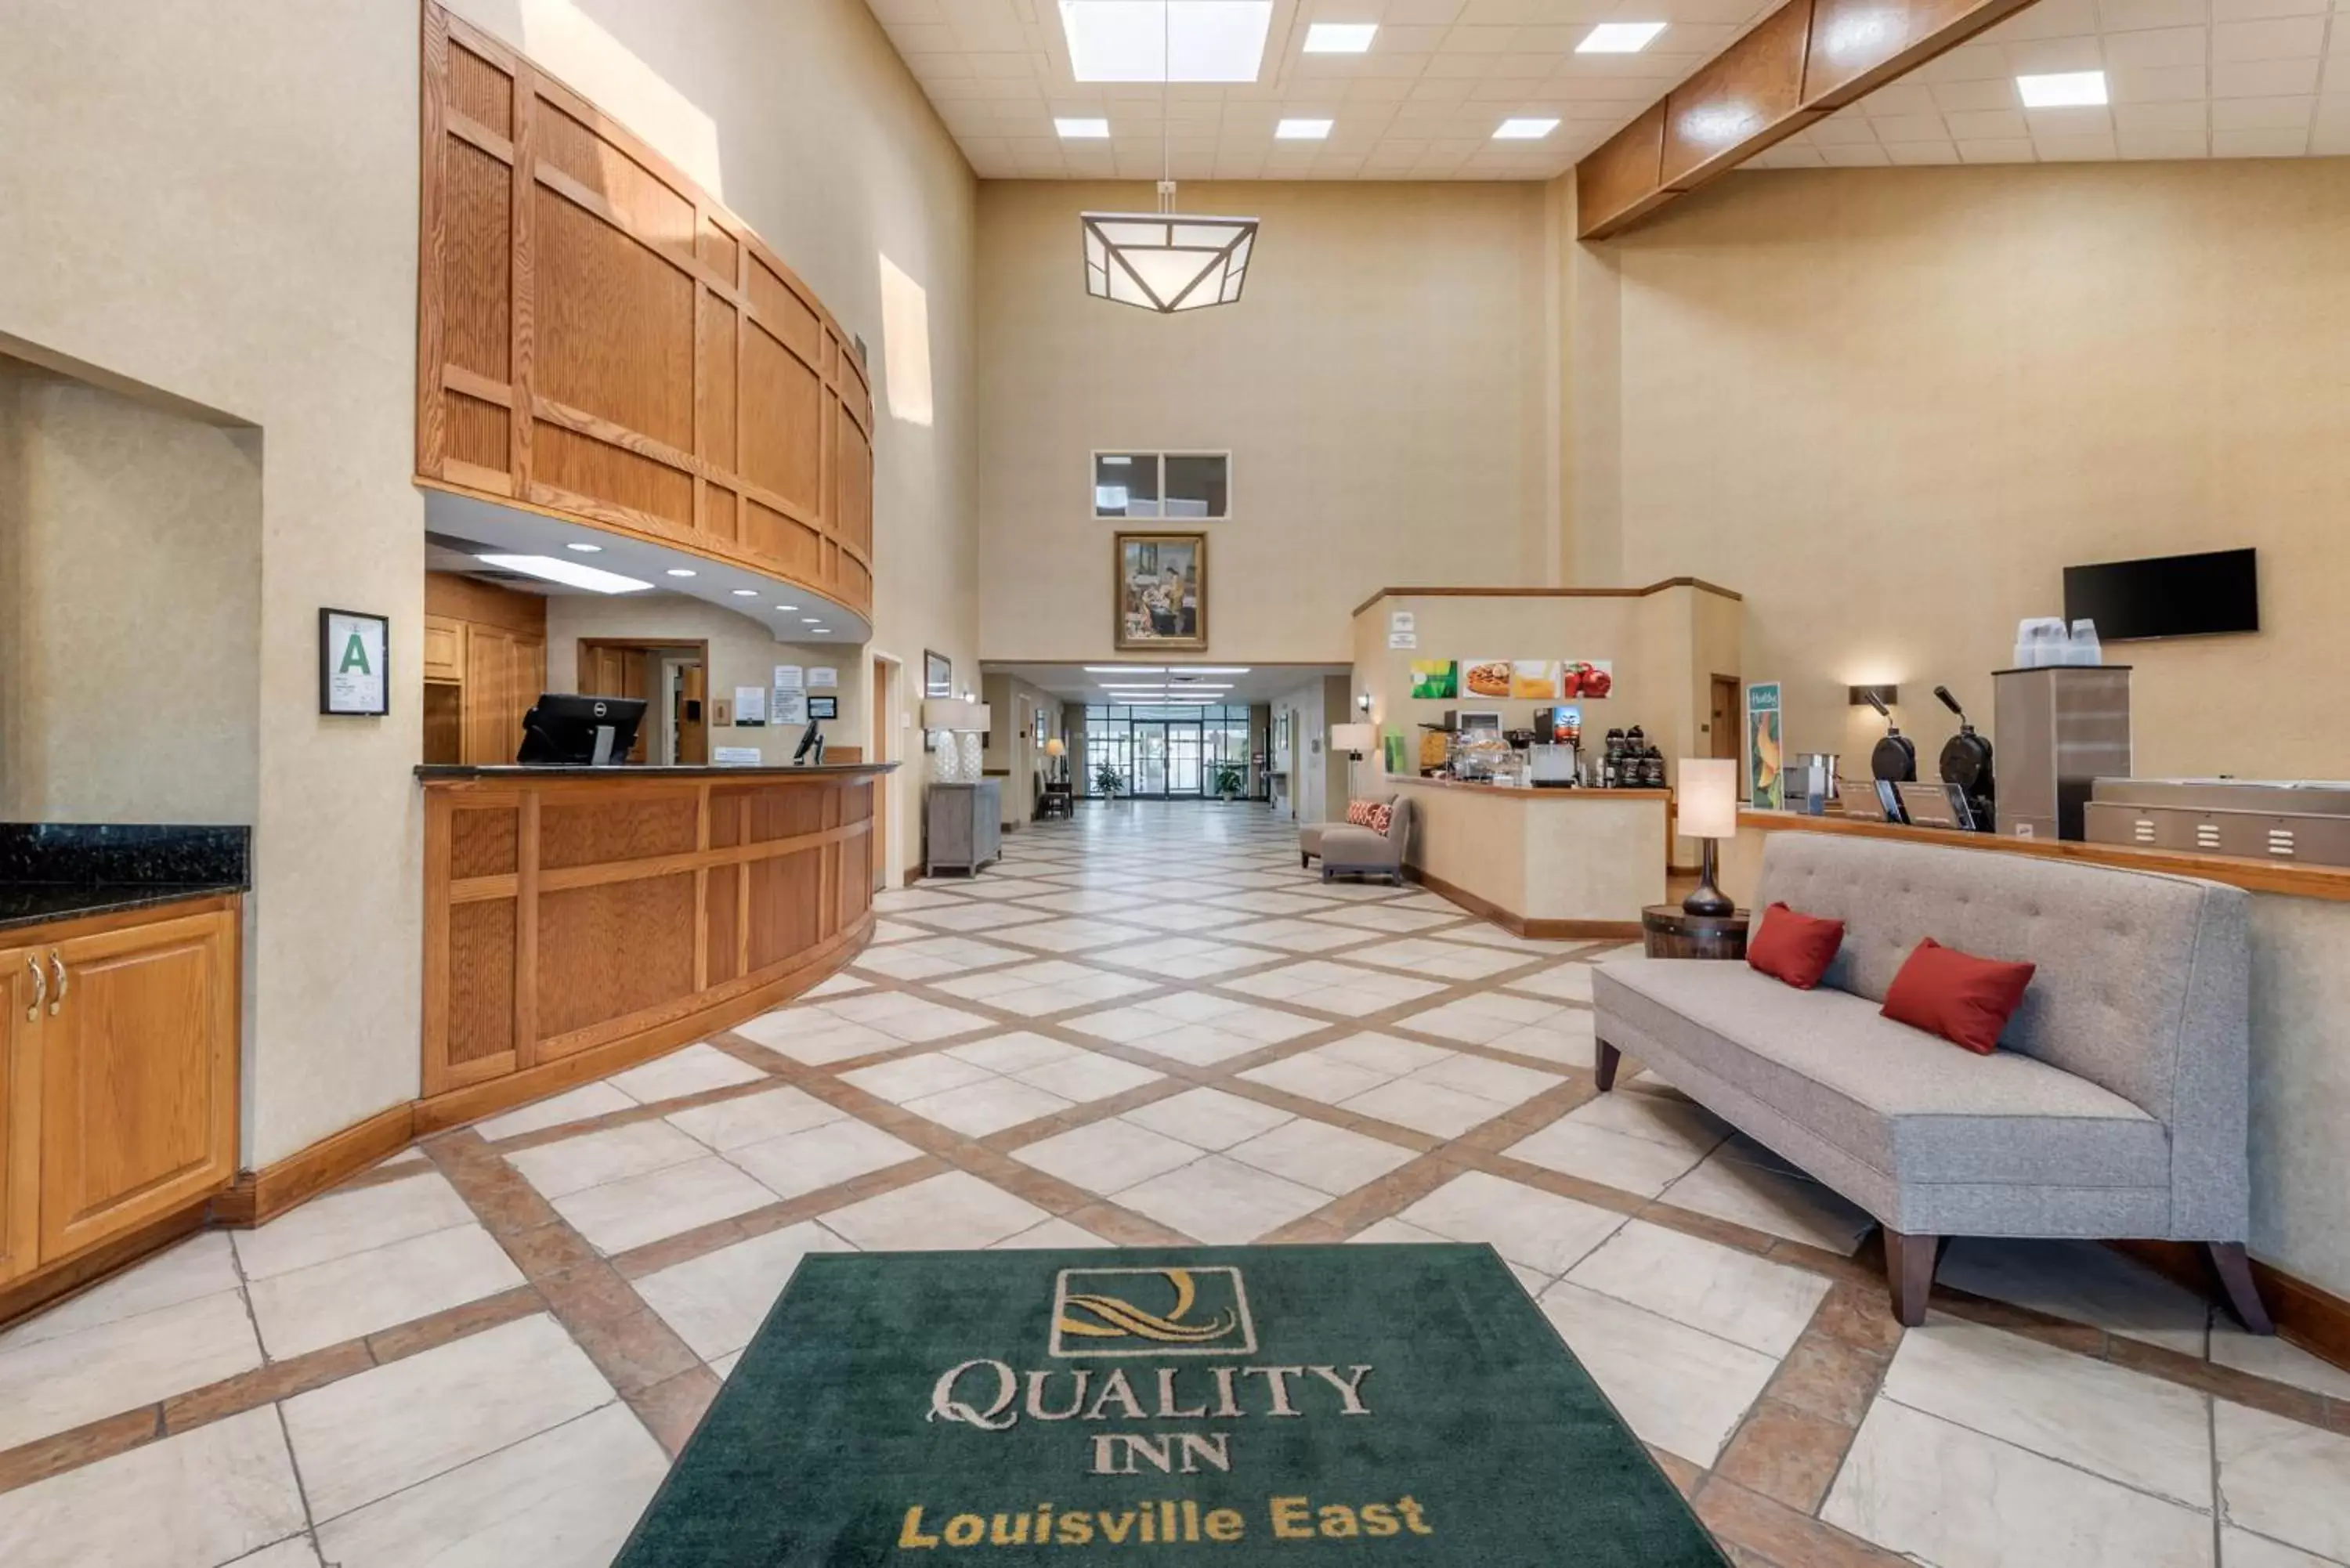 Lobby/Reception in Quality Inn Louisville